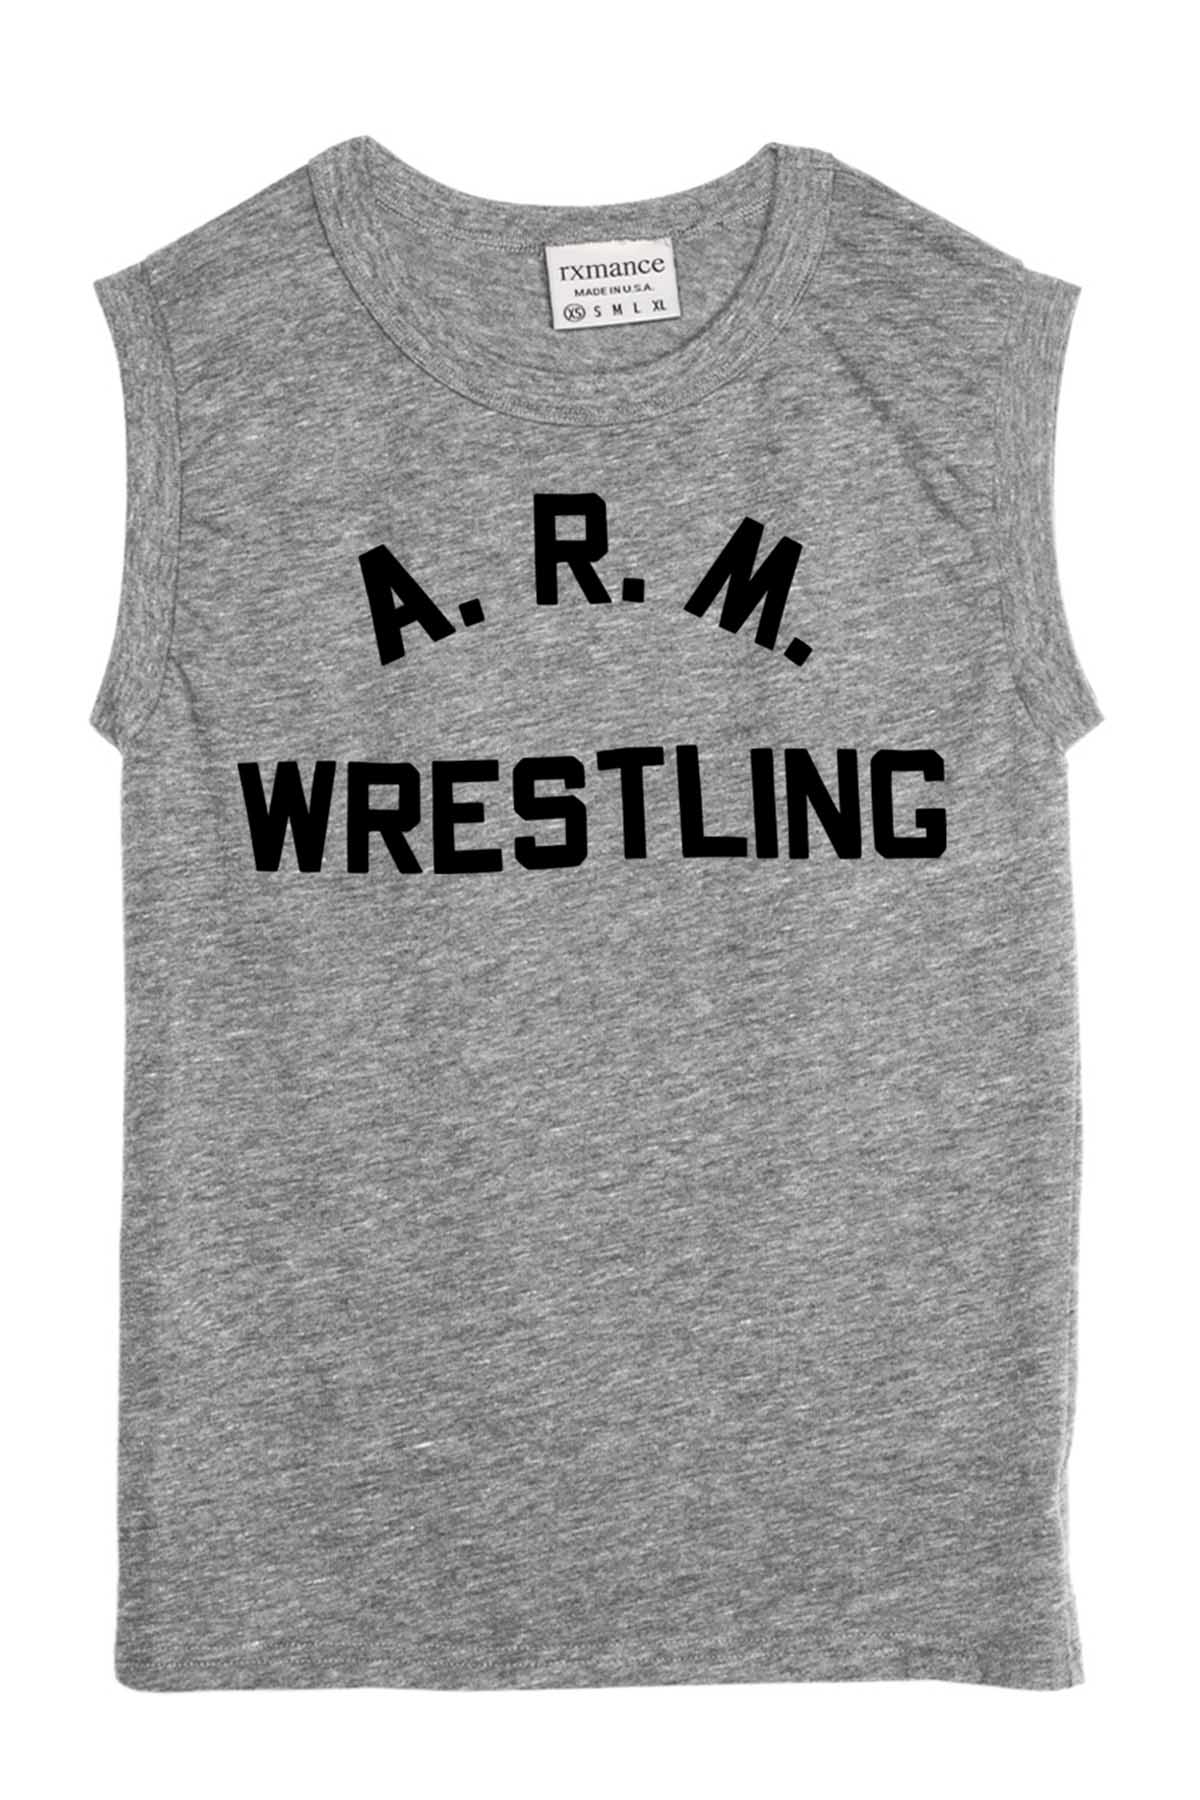 Rxmance Unisex Grey Arm Wrestling Muscle T